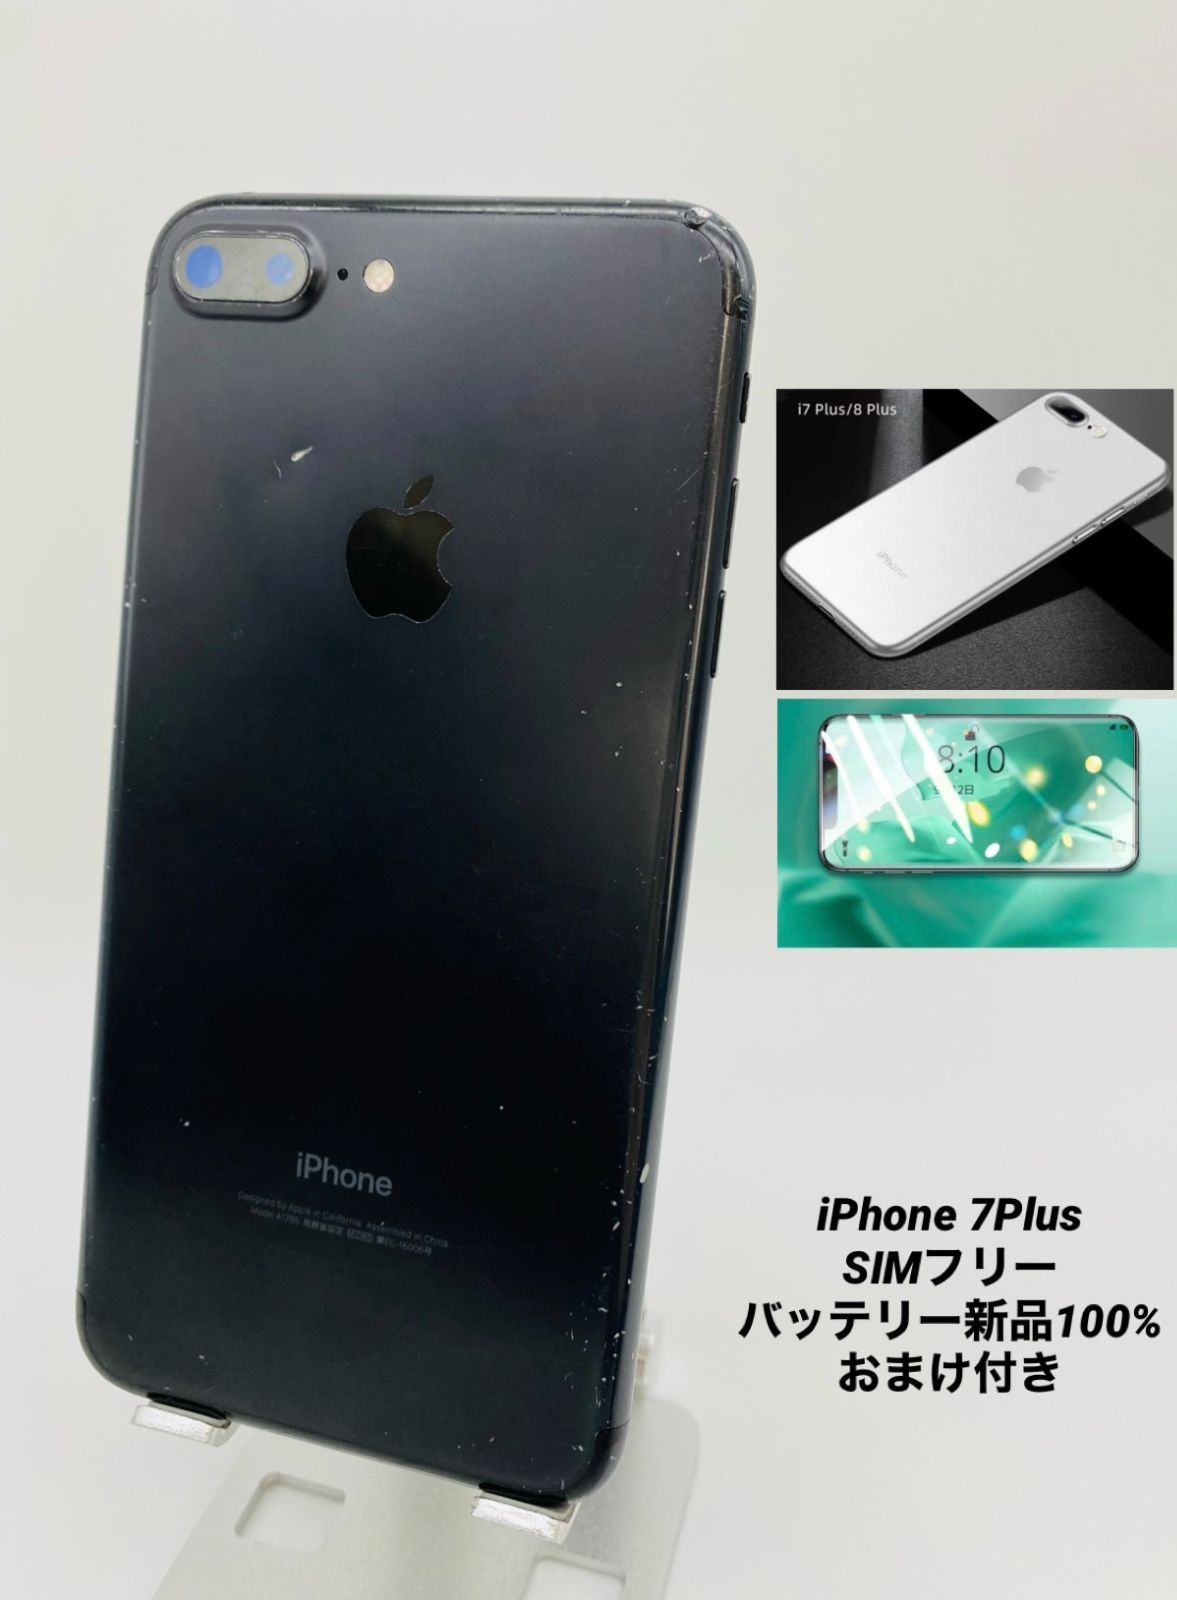 iPhone7 Plus 128GB ブラック/シムフリー/大容量3400mAh新品バッテリー 